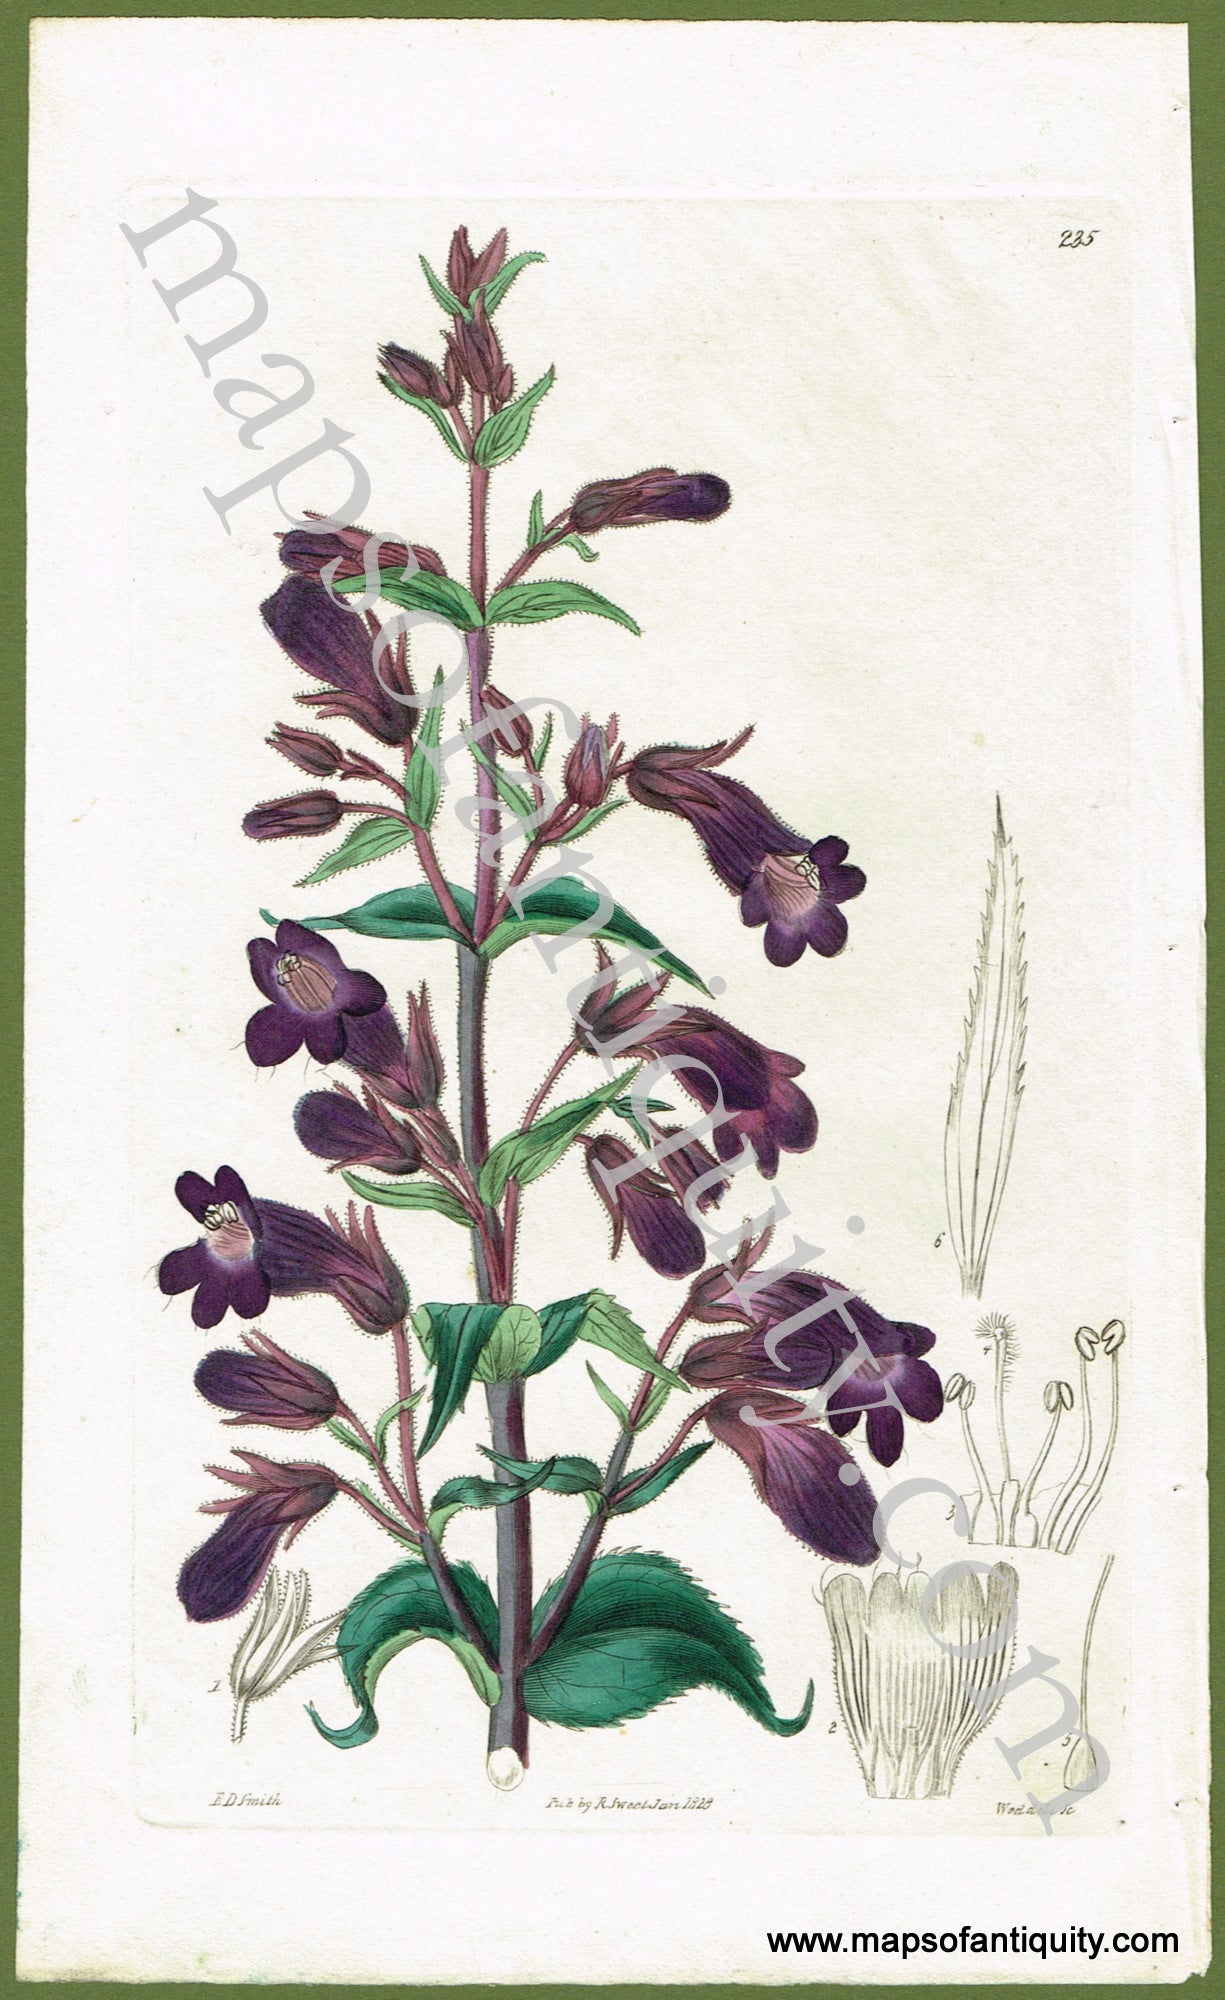 Antique-Hand-Colored-Engraved-Illustration-Chelone-atropurpurea-(Dark-Purple-Chelone)-Natural-History-Prints-Botanical-1828-R.-Sweet/Weddell-Maps-Of-Antiquity